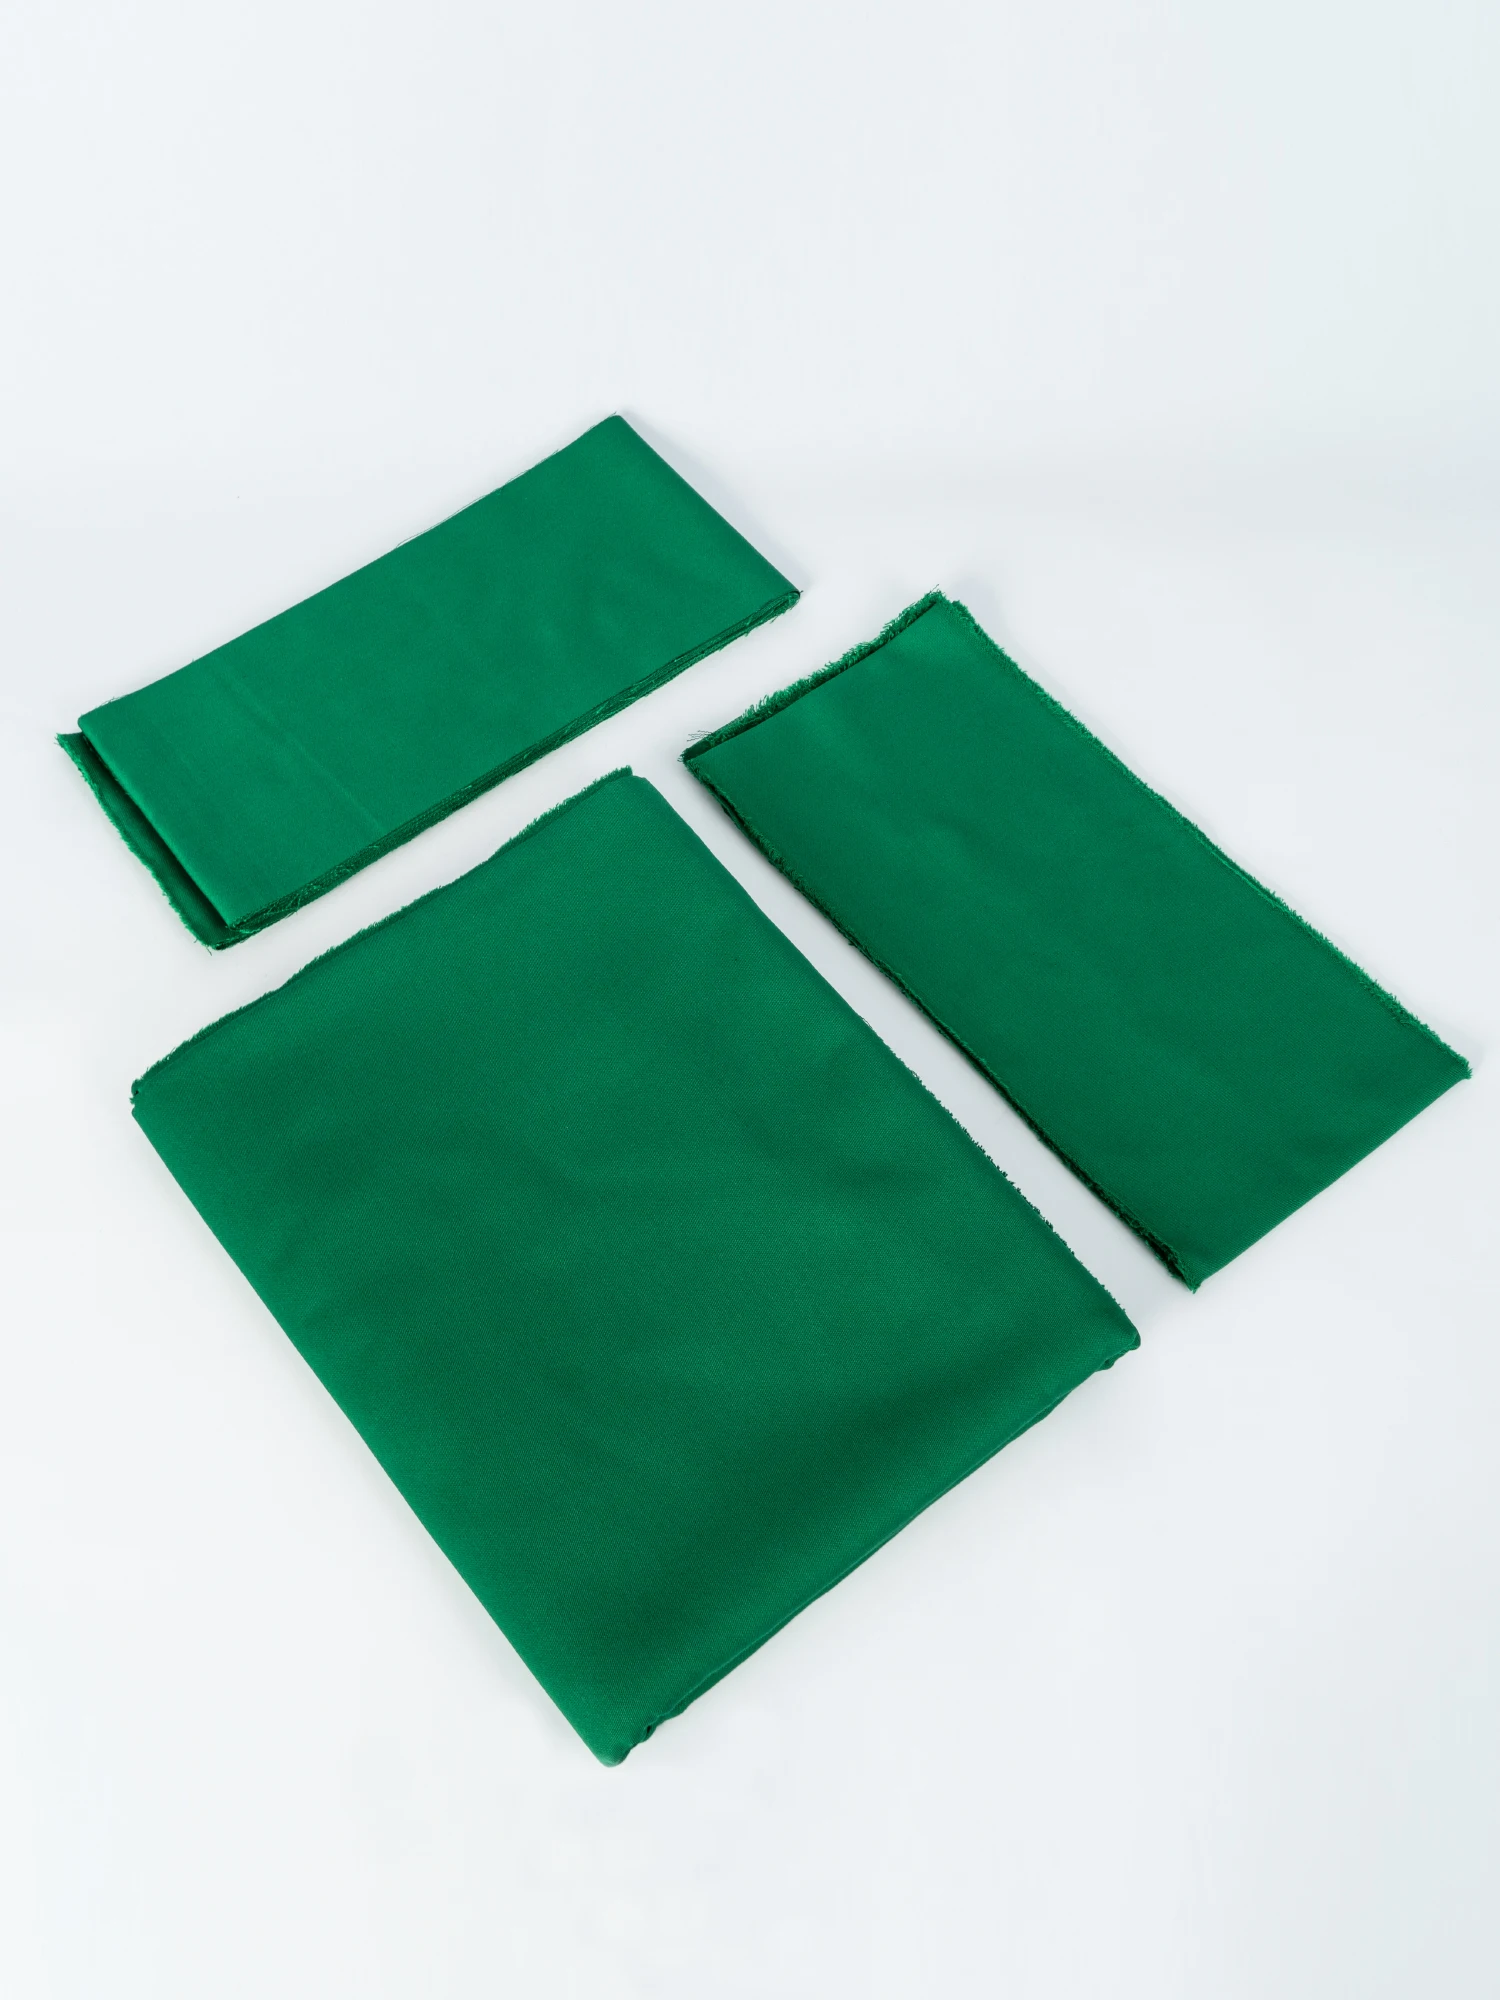 ERC Super Gold Terry Billiard Cloth Replacement Long Short and Body Cushion Ready Cut Green